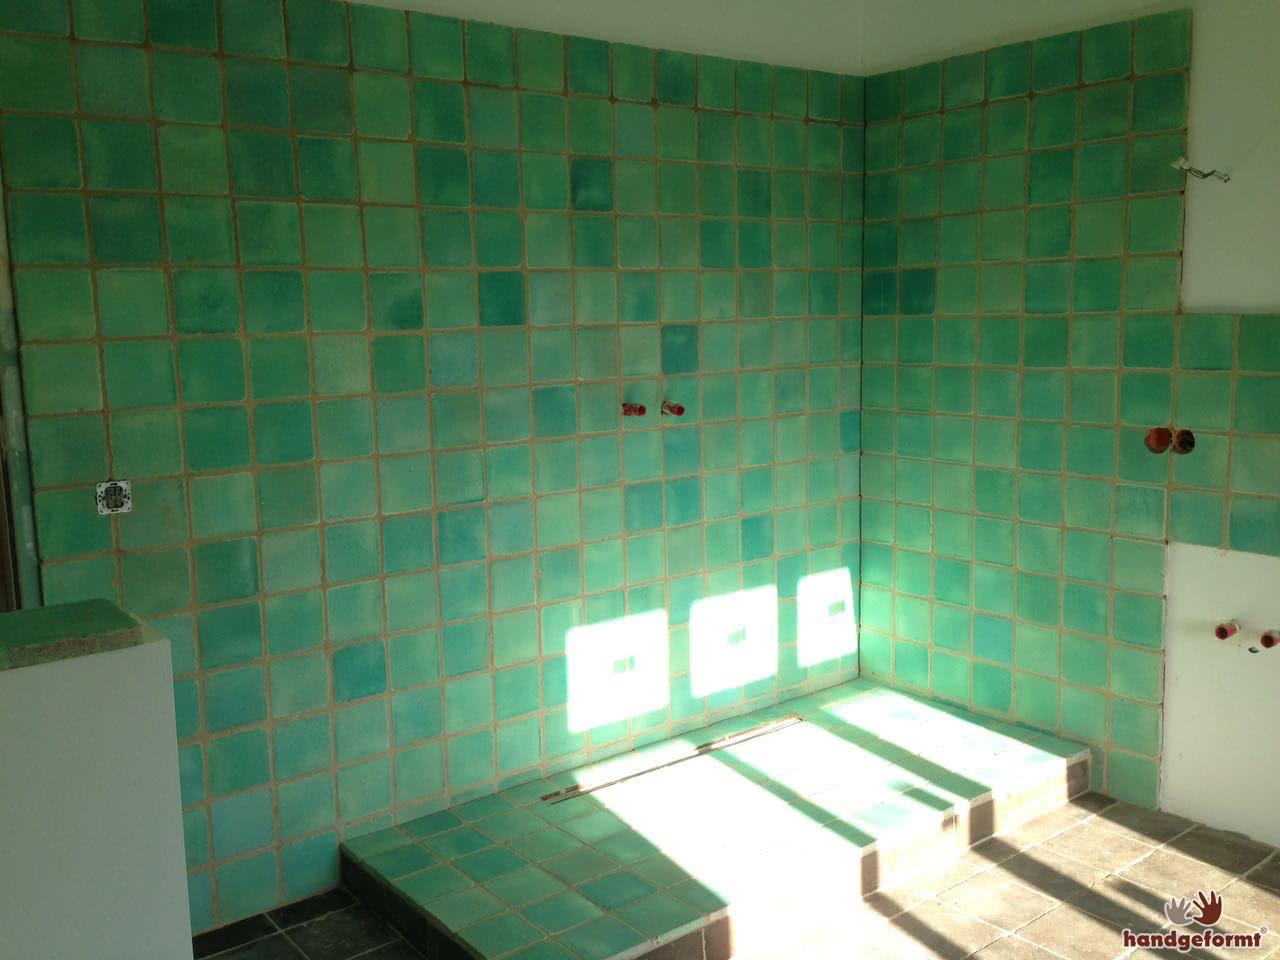 Hier wird das Duschen zu einem grünen Traum. Unsere matten Art Fortis Wandfliesen machen morgens garantiert munter!